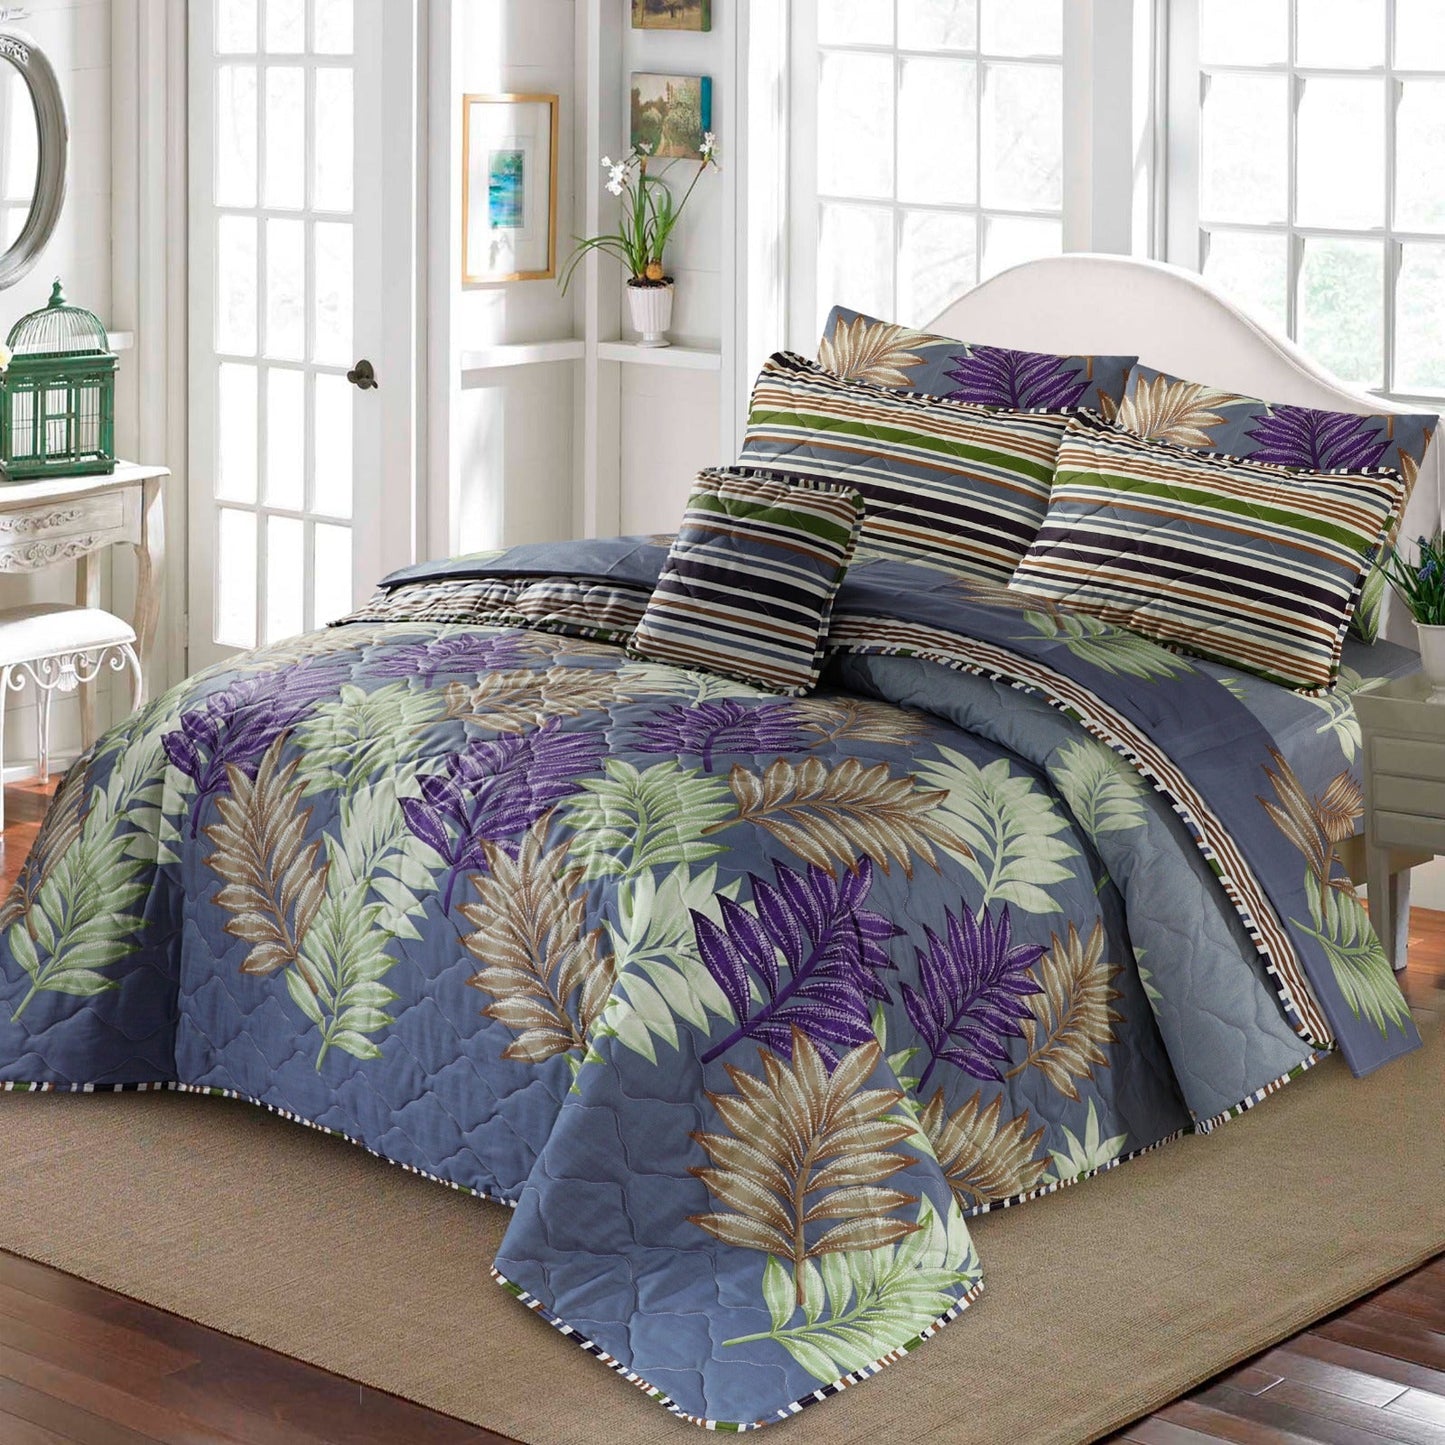 7 Pcs Quilted Comforter Set - D-630